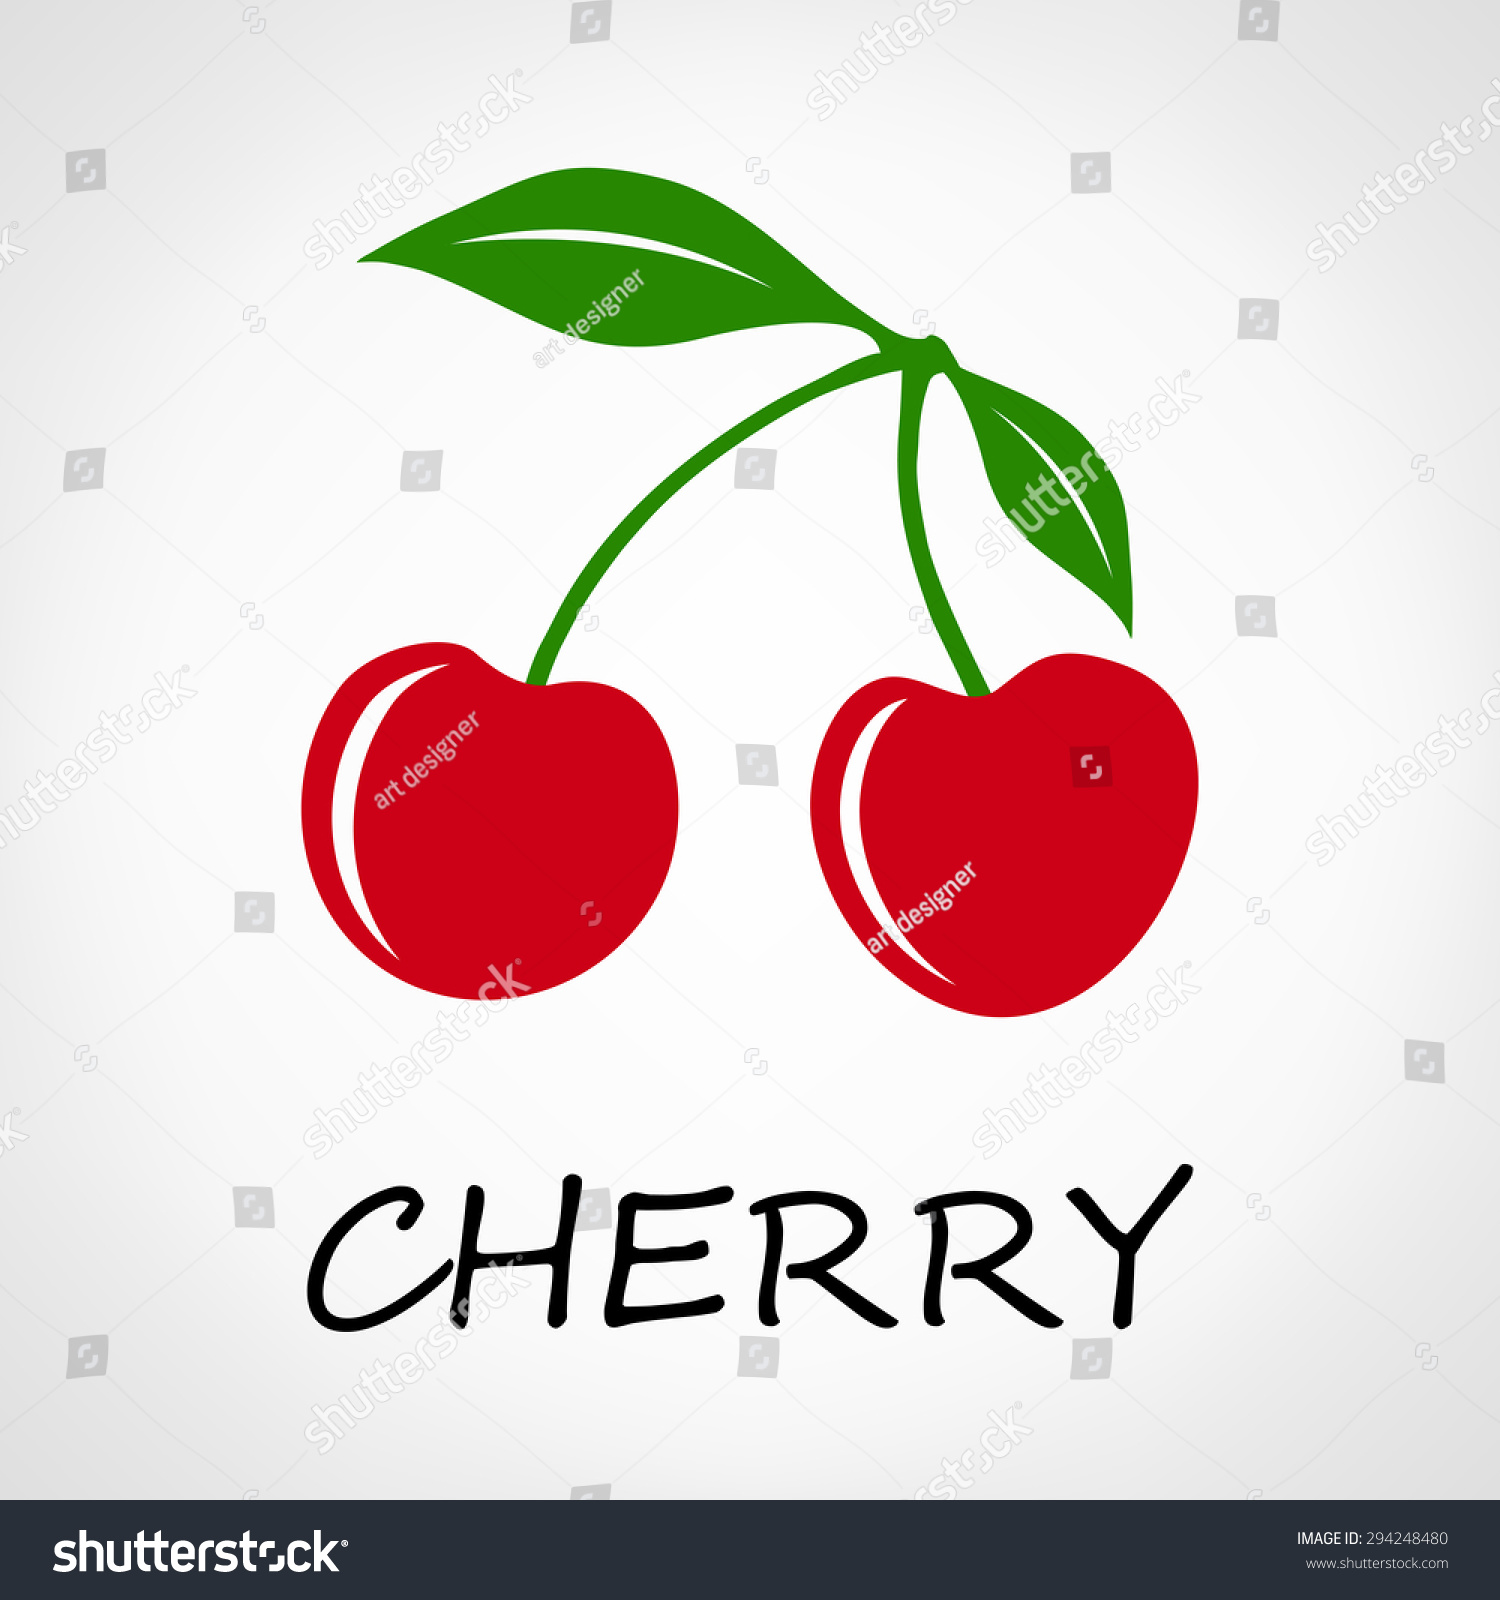 Cherry Vector Stock Vector (Royalty Free) 294248480 - Shutterstock